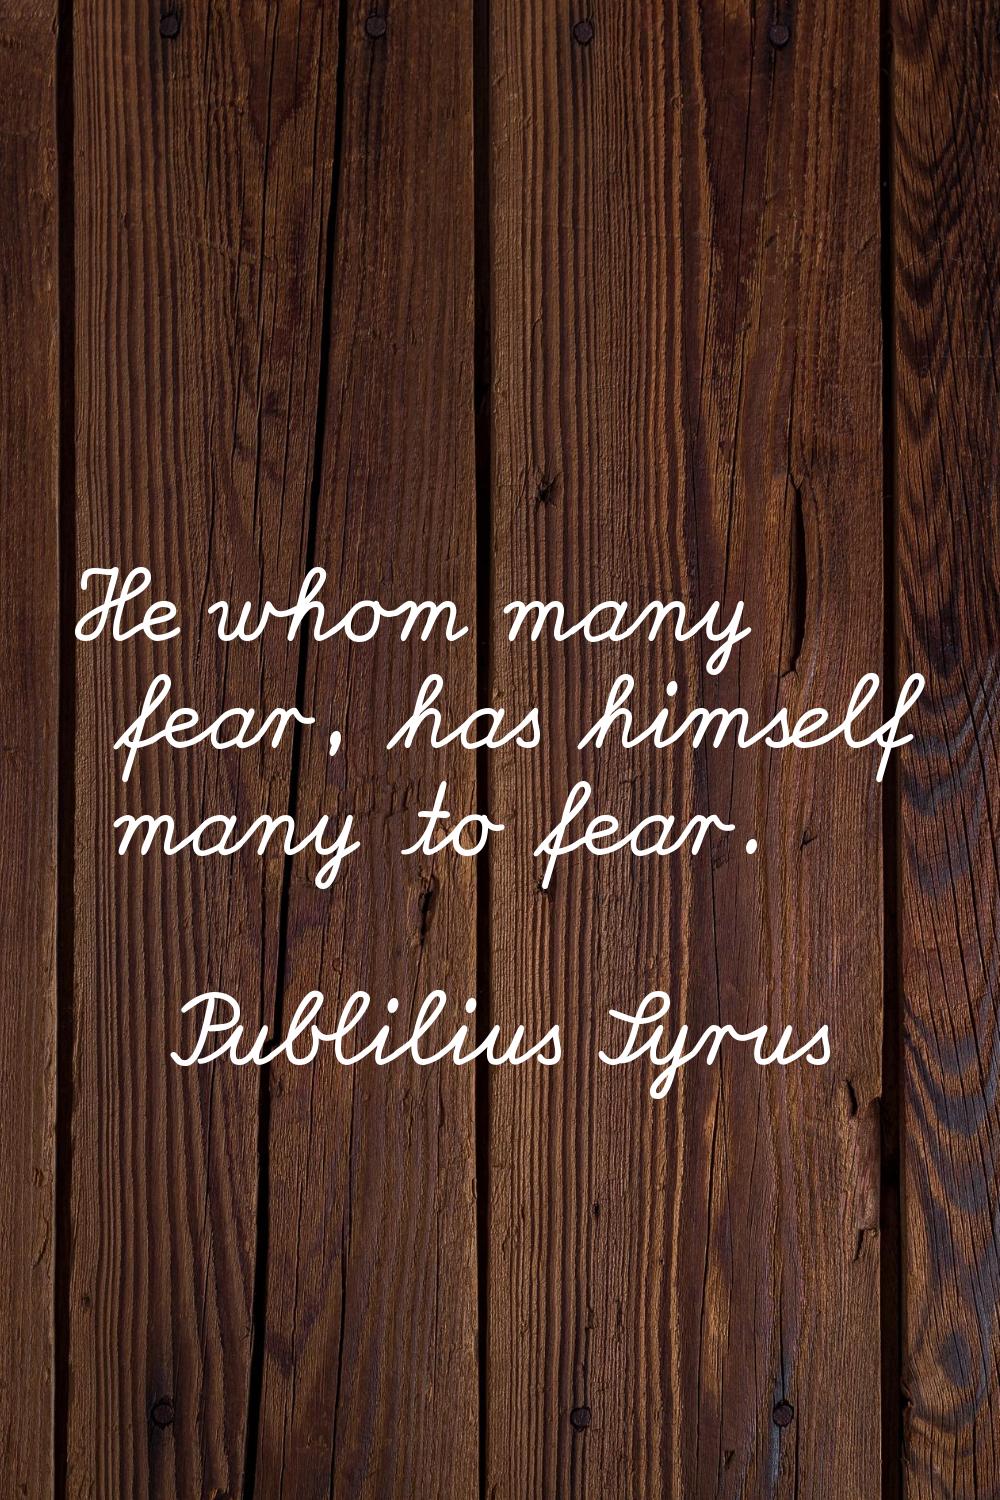 He whom many fear, has himself many to fear.